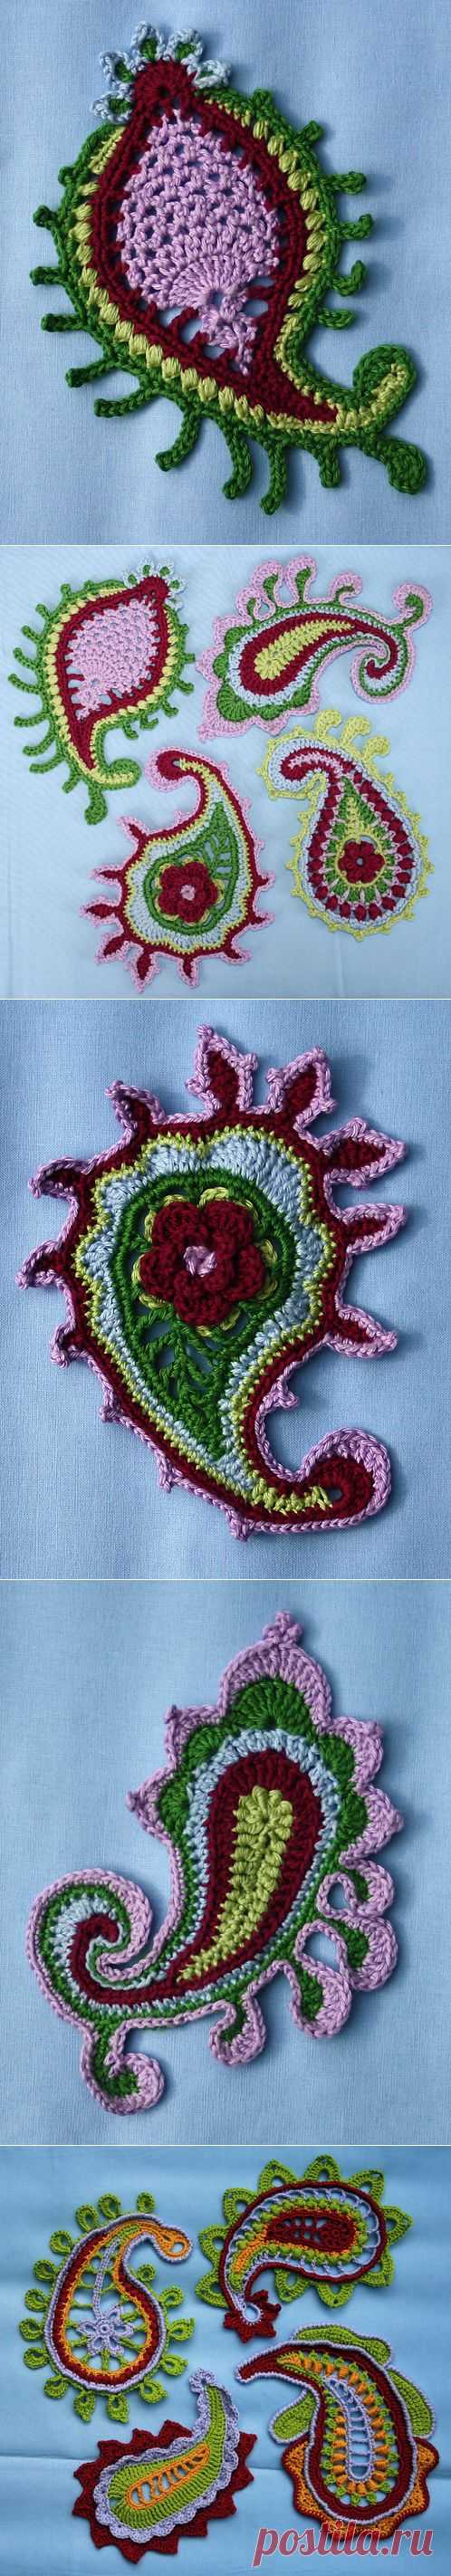 art crochet: paisley irish lace patterns - crafts ideas - crafts for kids